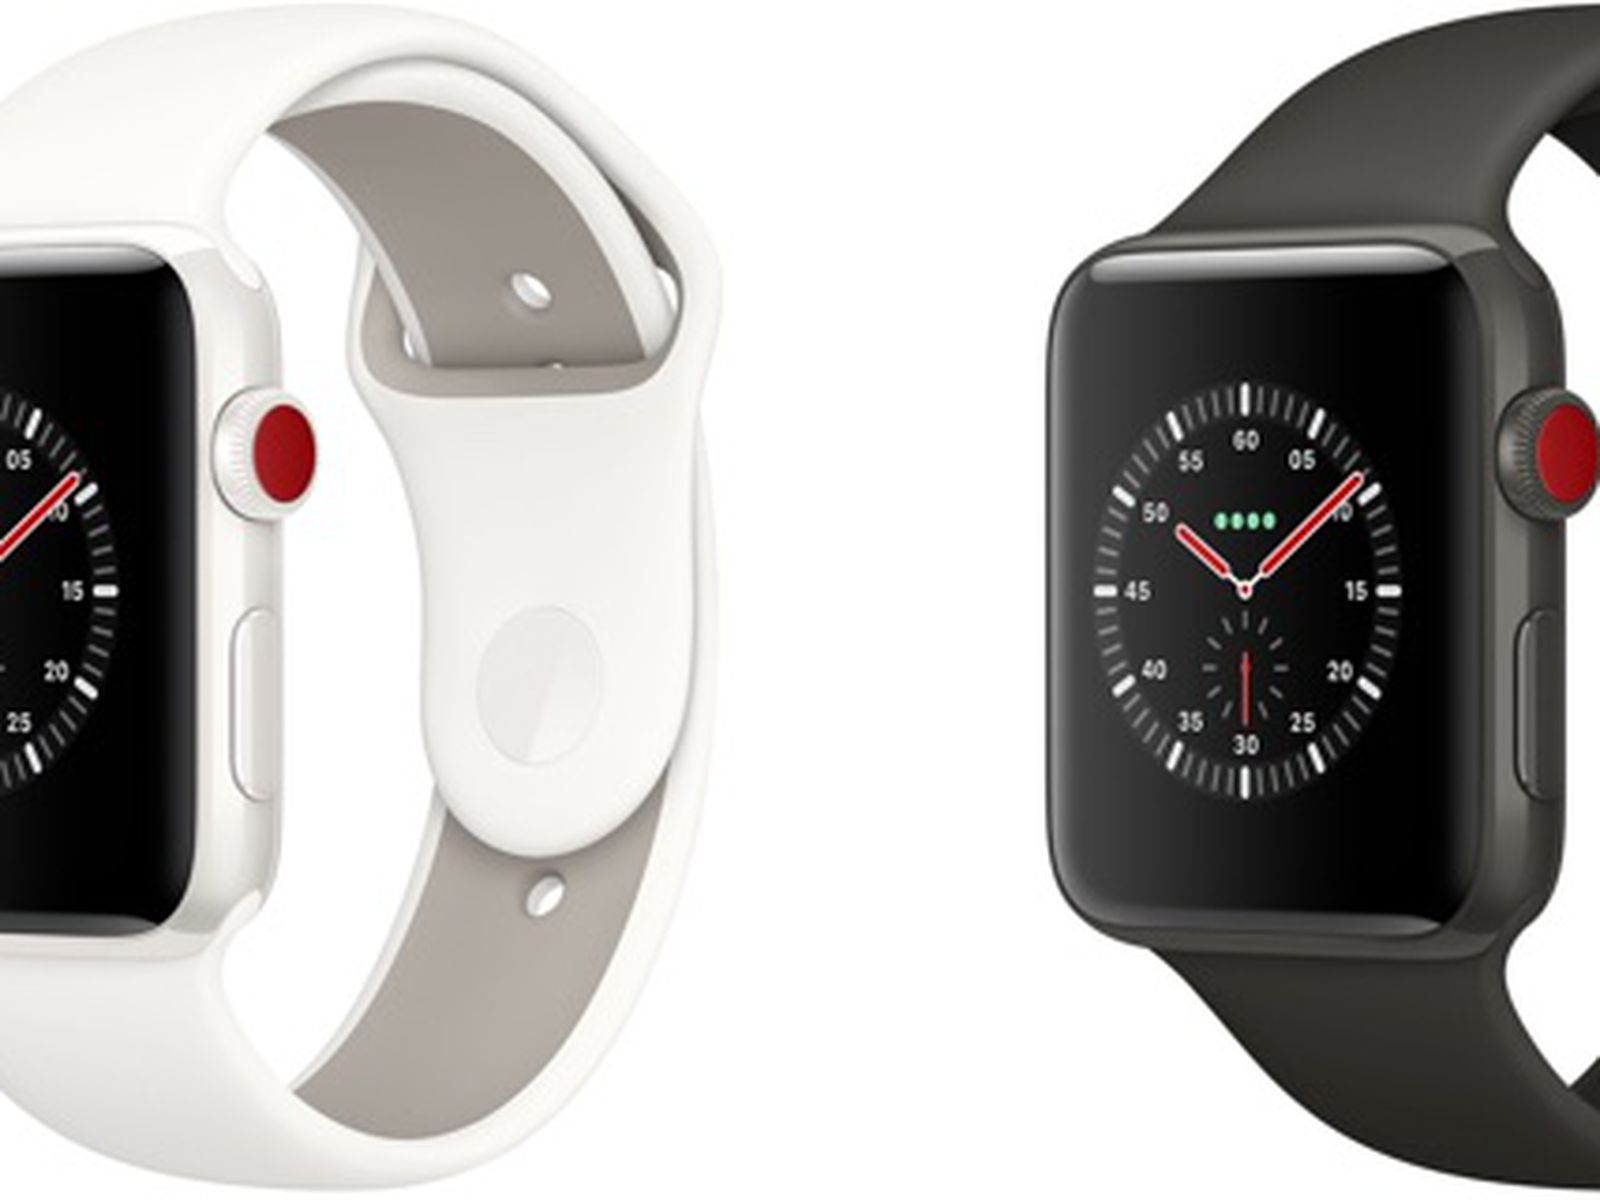 Apple watch edition. Apple watch 5 Cellular Ceramic Case. Watch Series 6 44mm Aluminum Ceramic Case ECG Heart rate Bluetooth. ECG watch Series 2 45mm. Часы Series6.44mm al uminum & Ceramic Ceramic Case. ECG heartrate. Bluetooth. Watch.